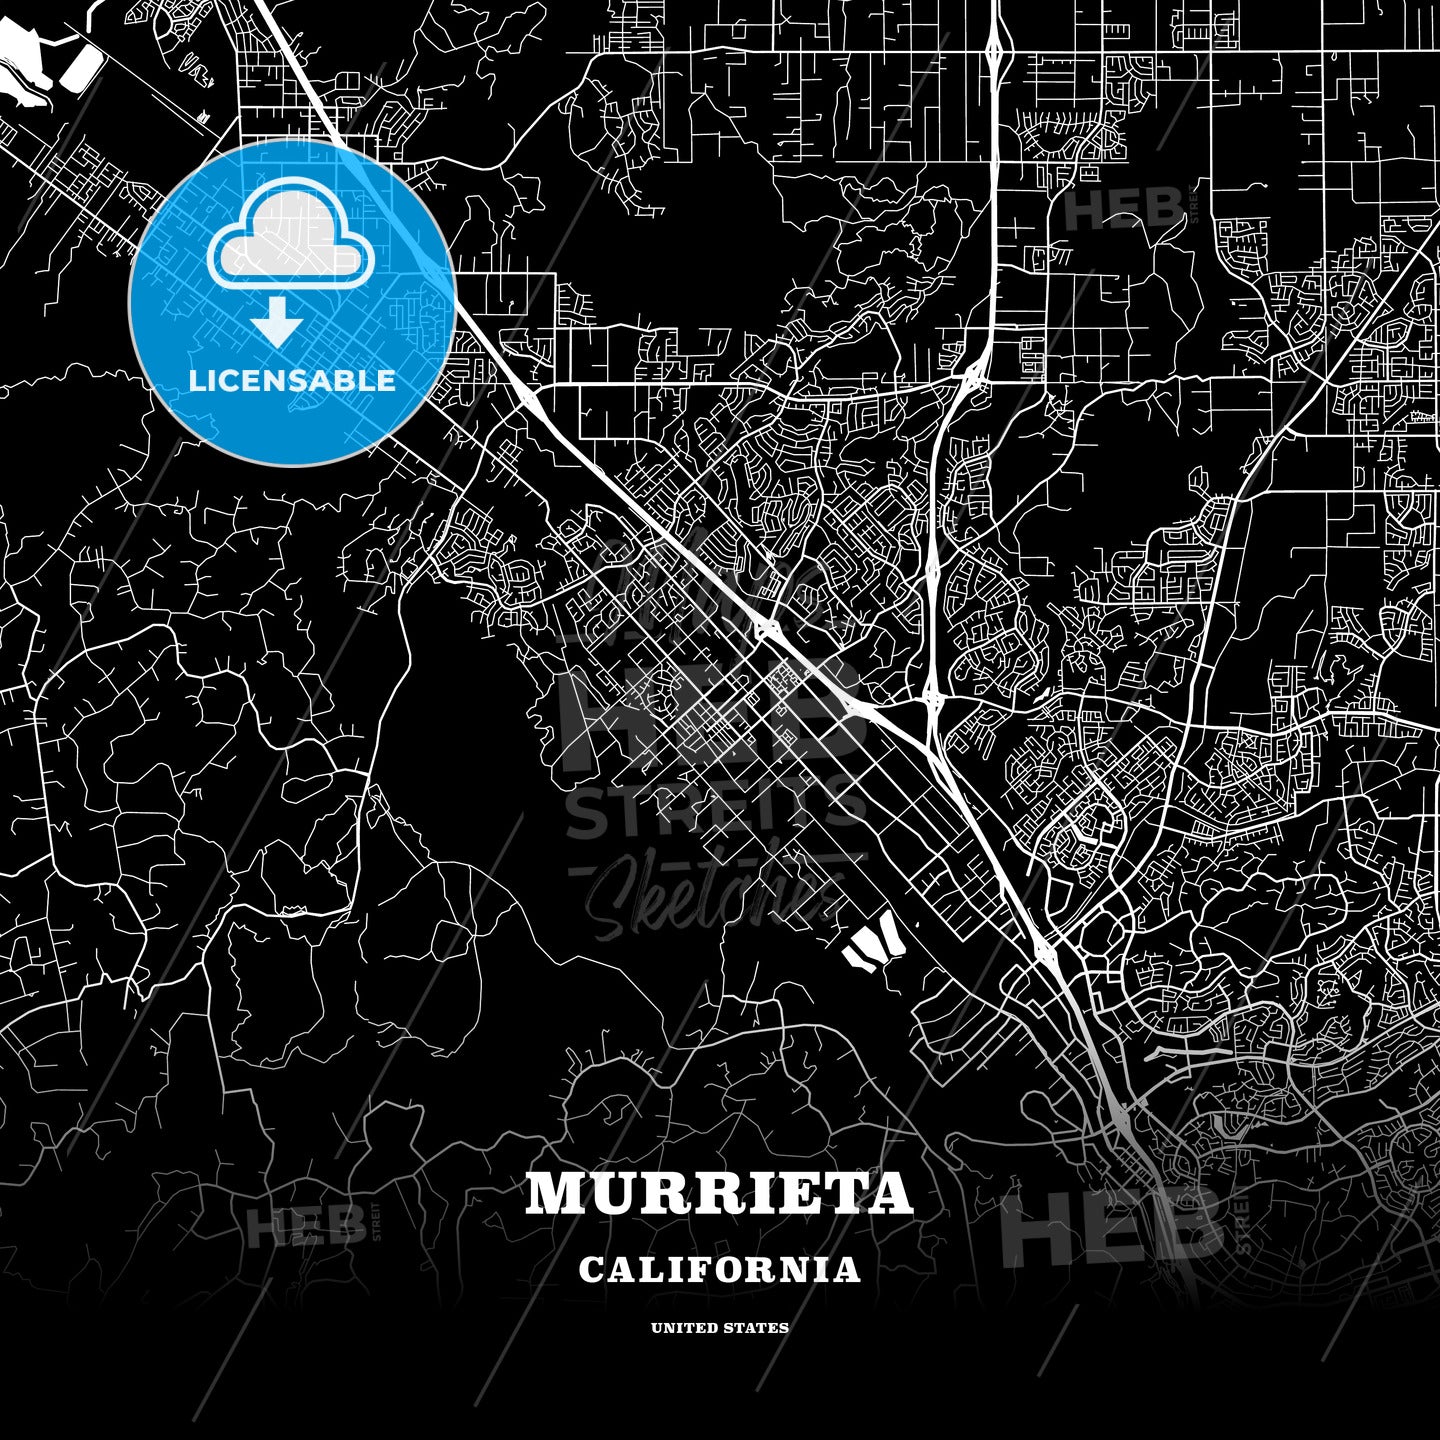 Murrieta, California, USA map